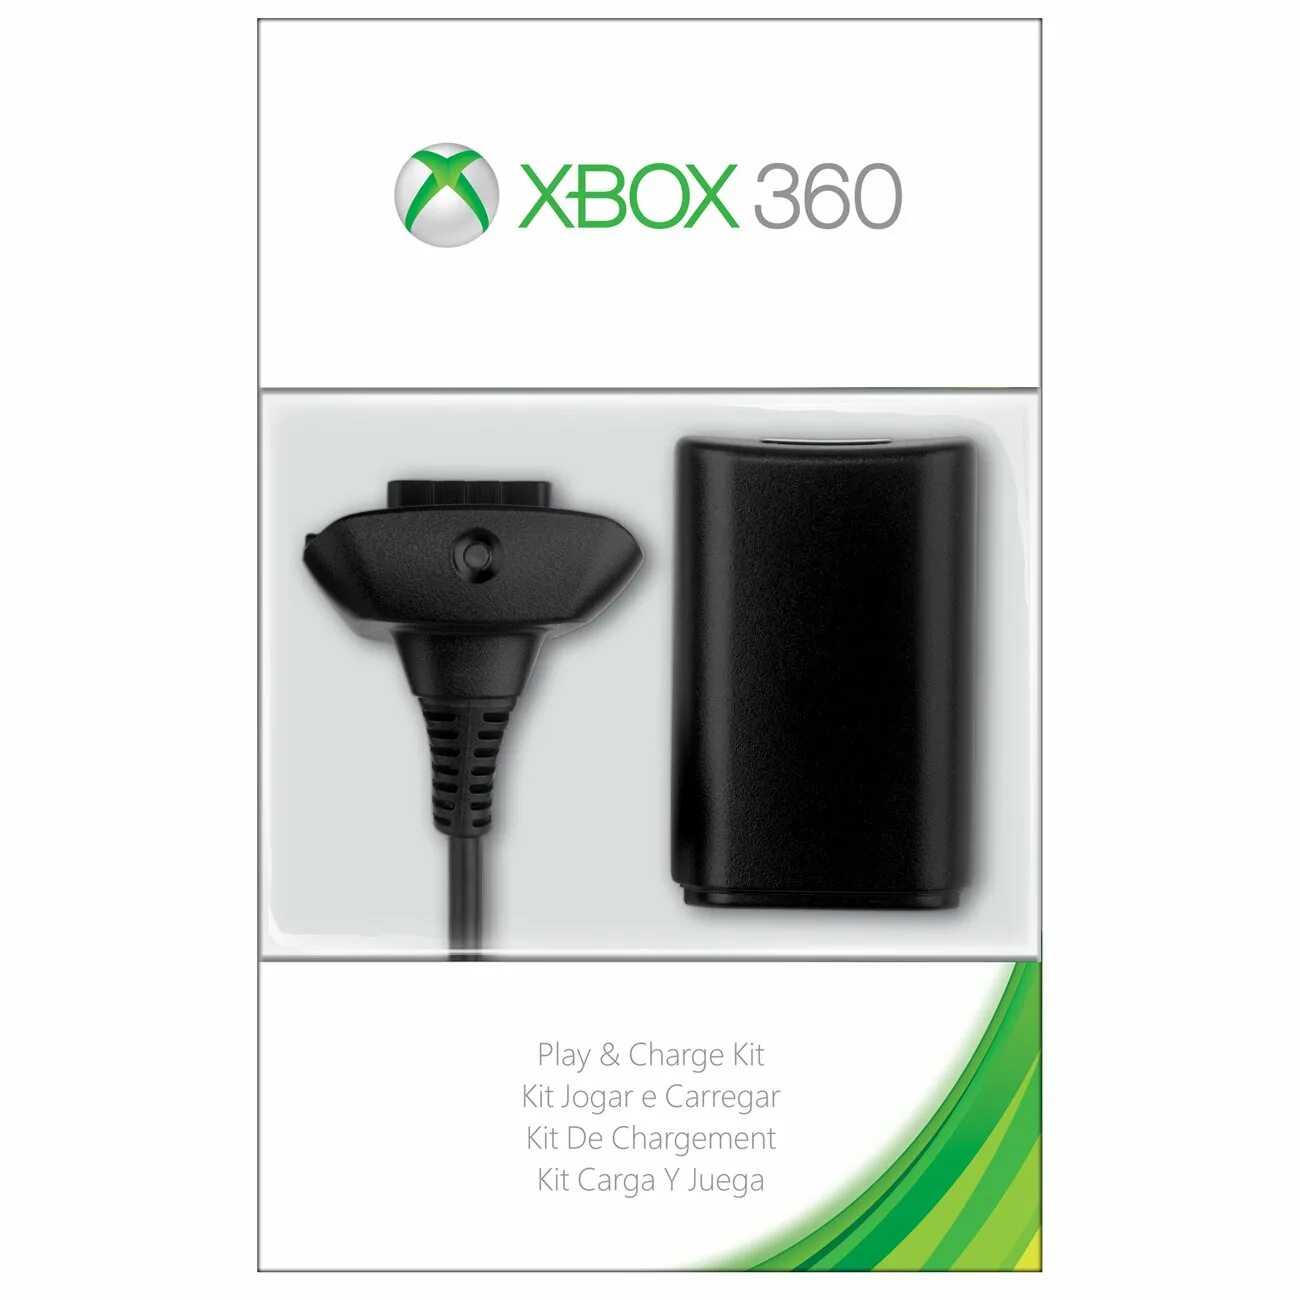 Xbox 360 play. Кабель зарядки батареи джойстика Xbox 360. Charge Kit Xbox 360. Microsoft Xbox 360 Play & charge Kit. Xbox 360 quick charge Kit.